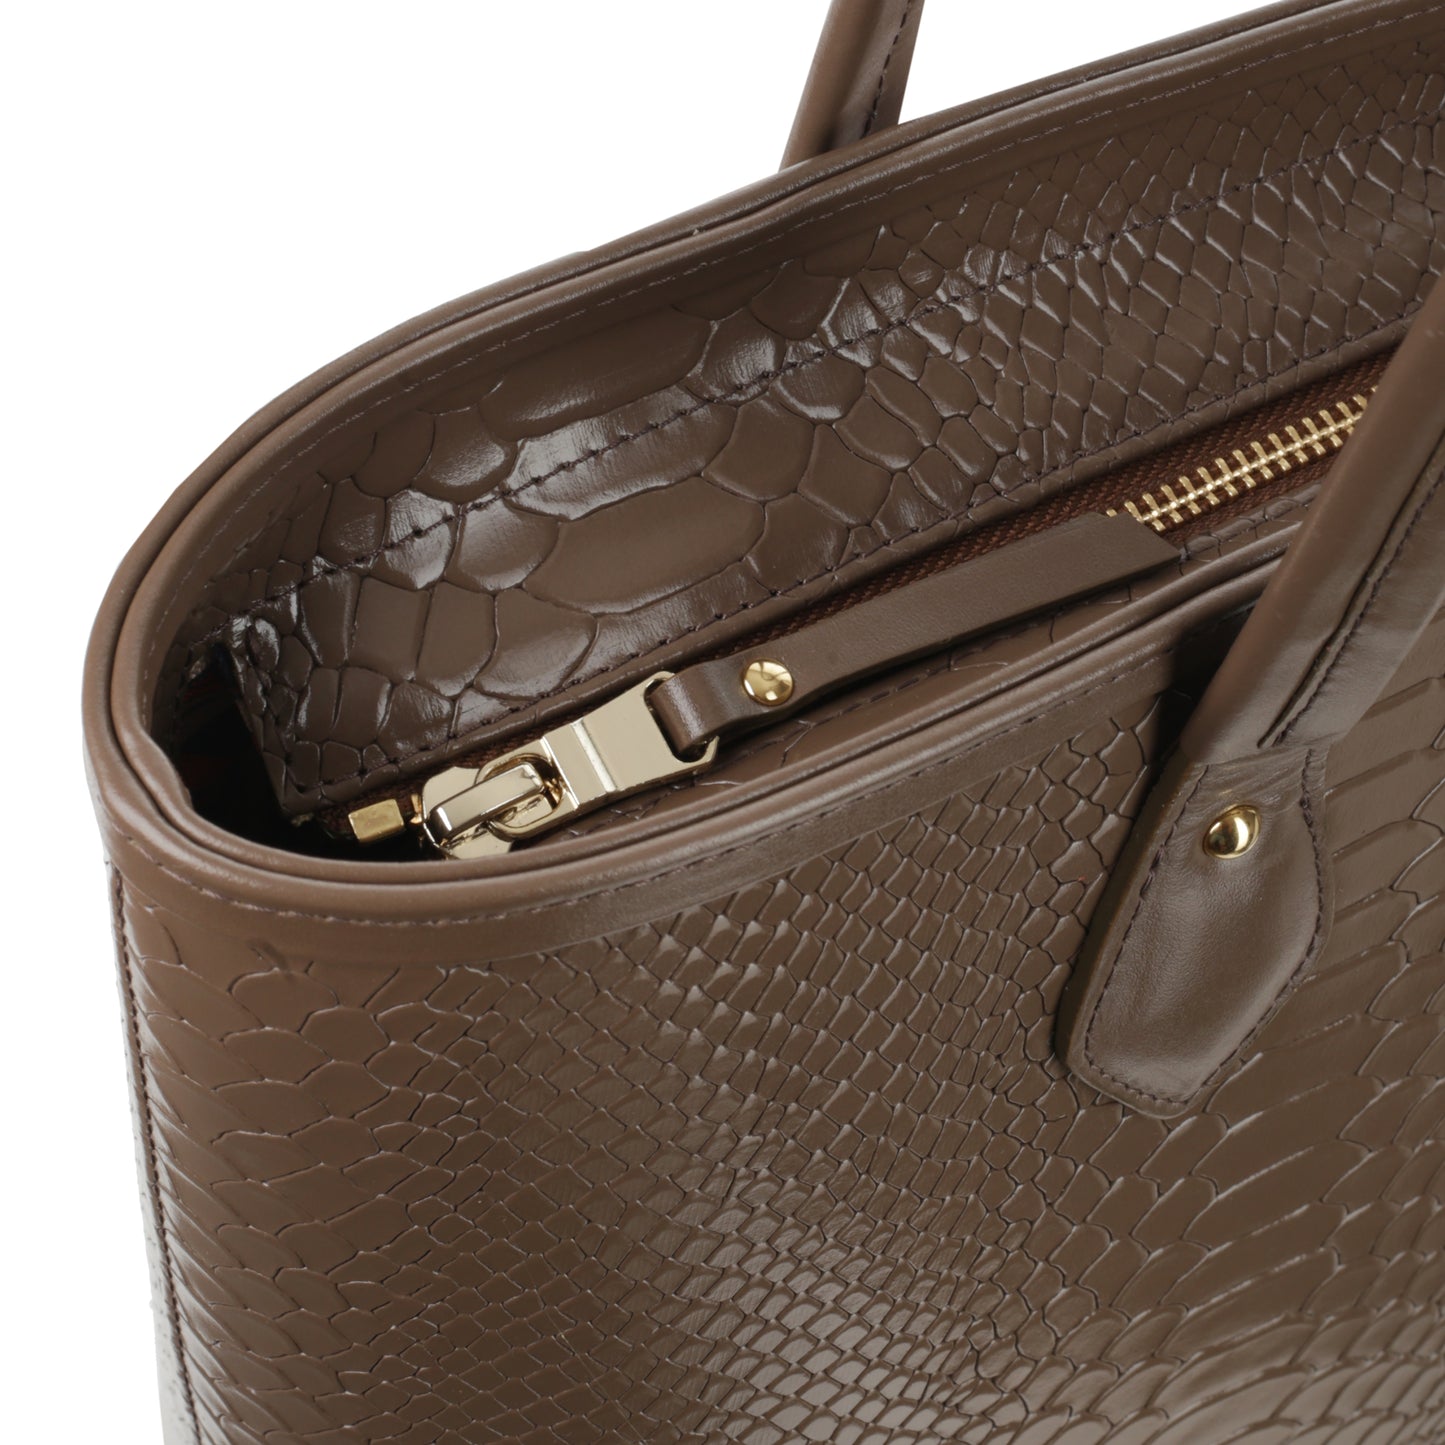 GINA MOCCA women's leather handbag